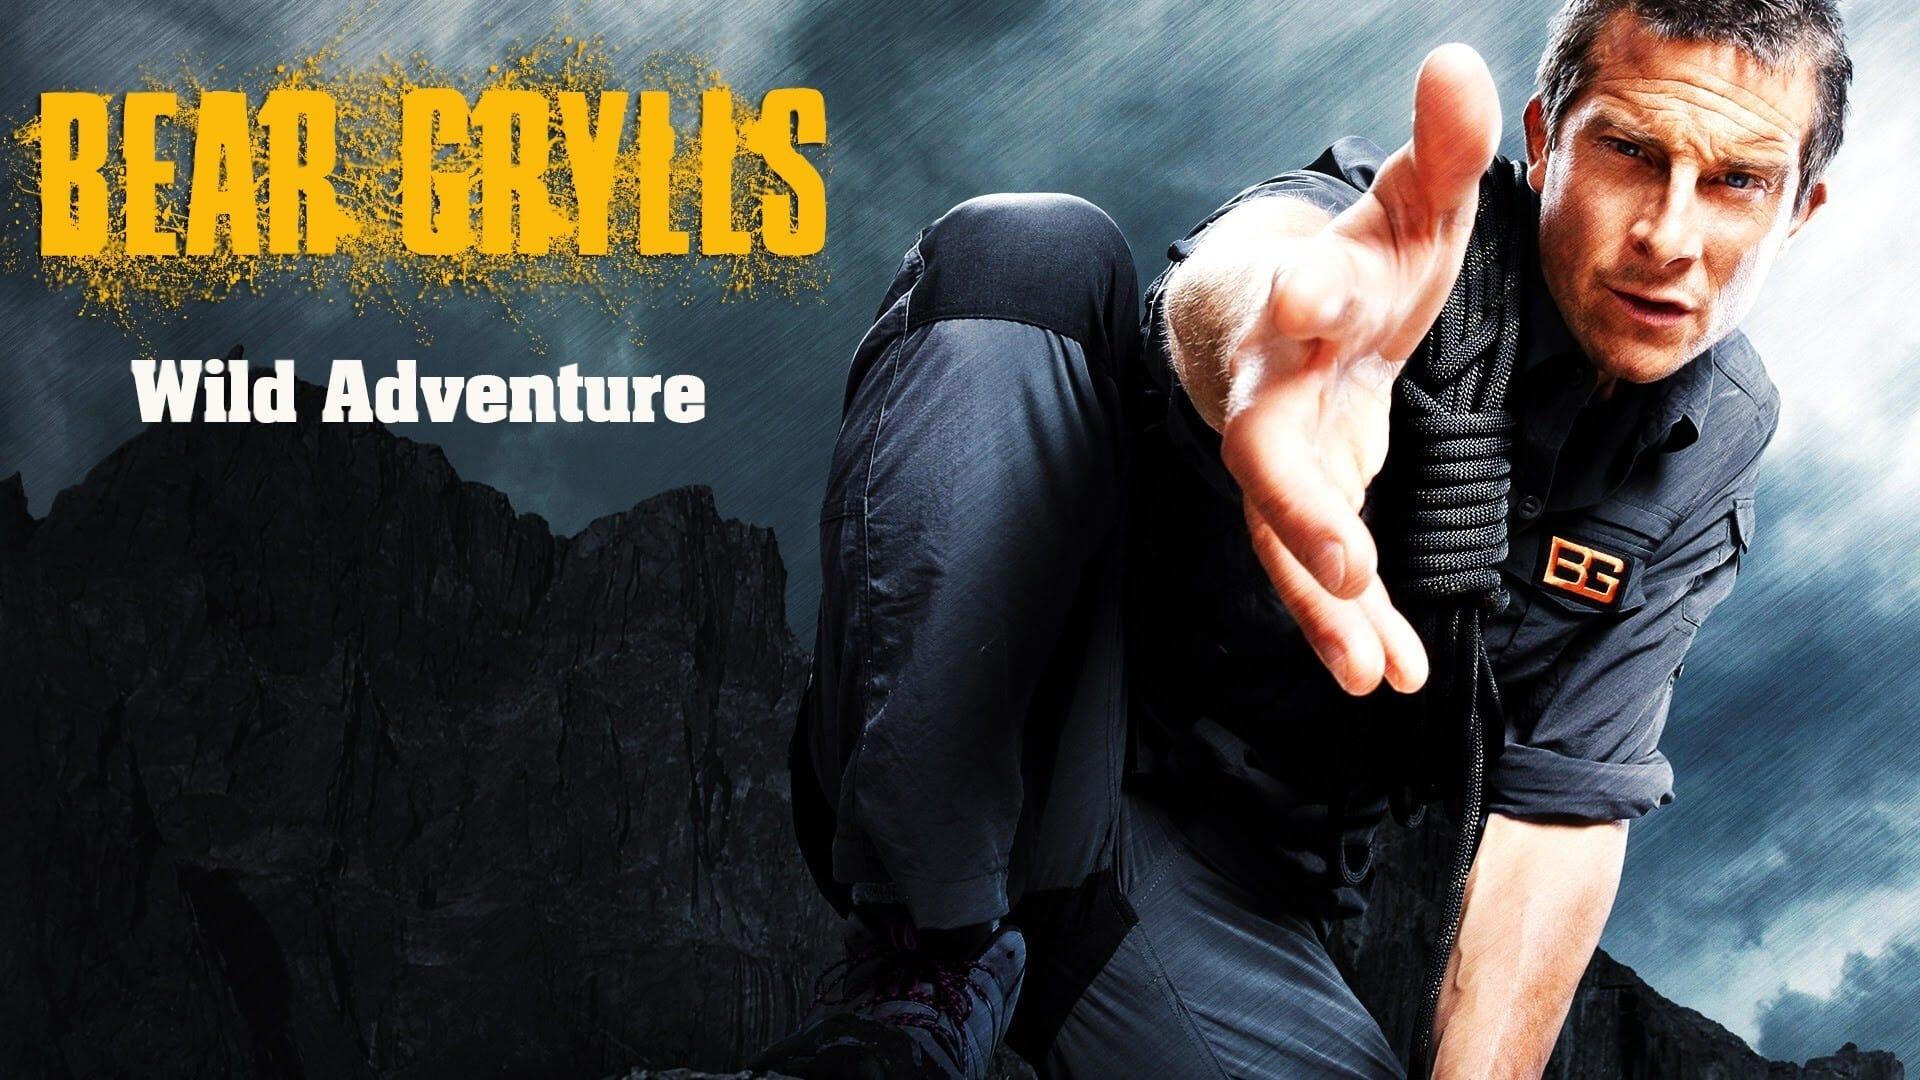 Bear Grylls Wild Adventure backdrop